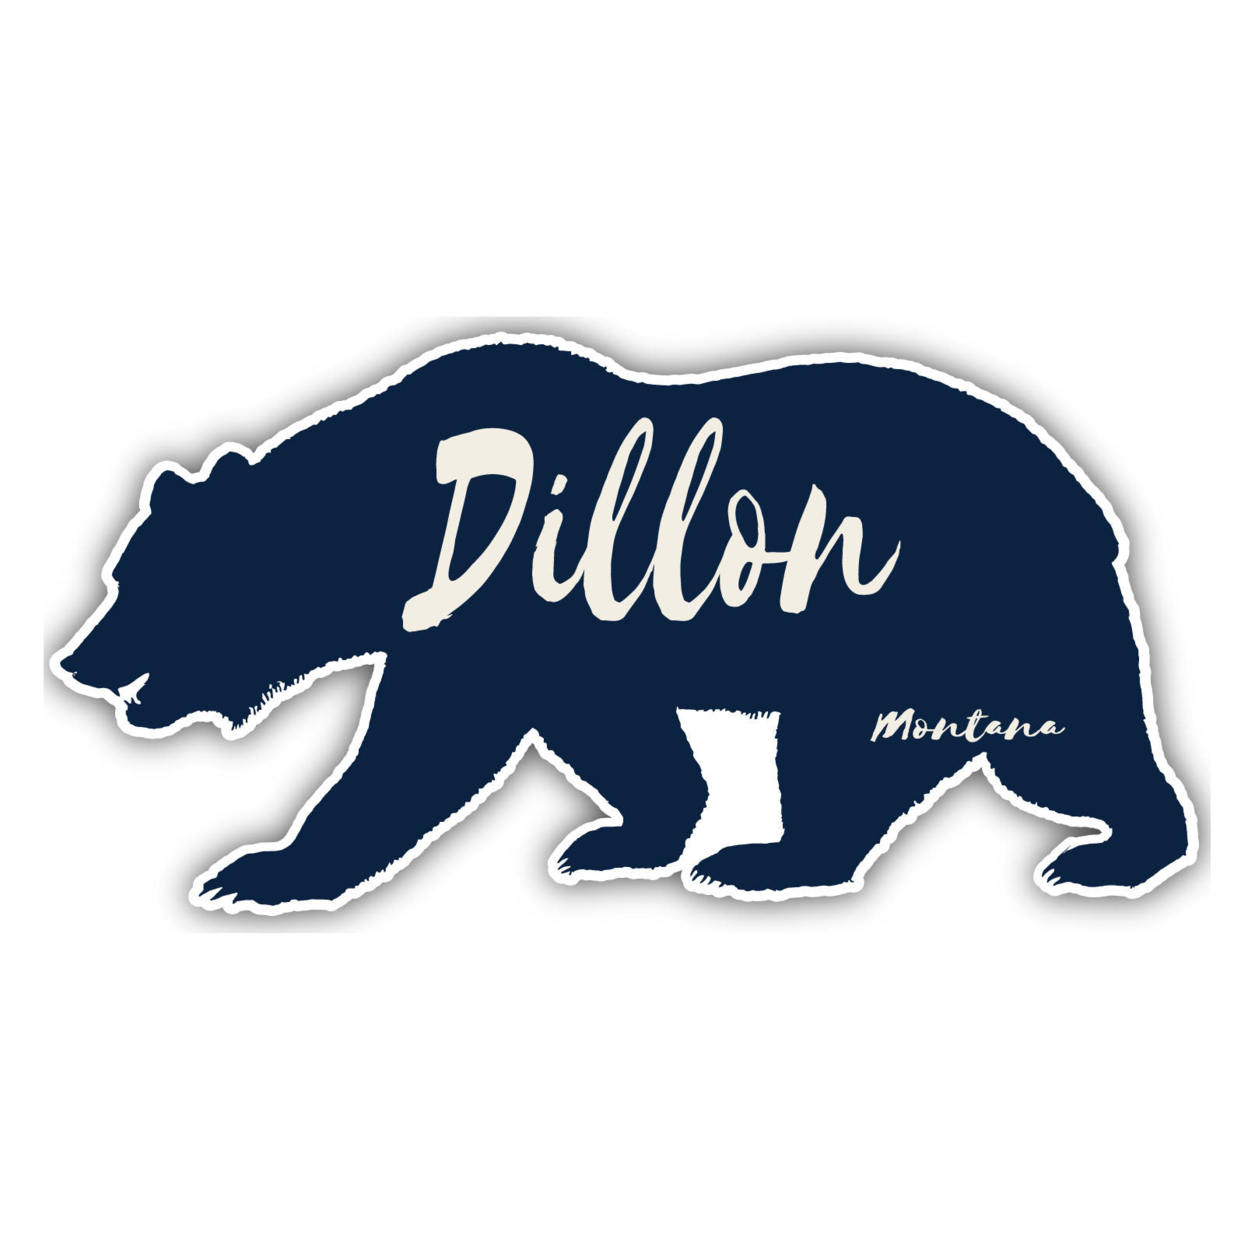 Dillon Montana Souvenir Decorative Stickers (Choose Theme And Size) - Single Unit, 12-Inch, Camp Life